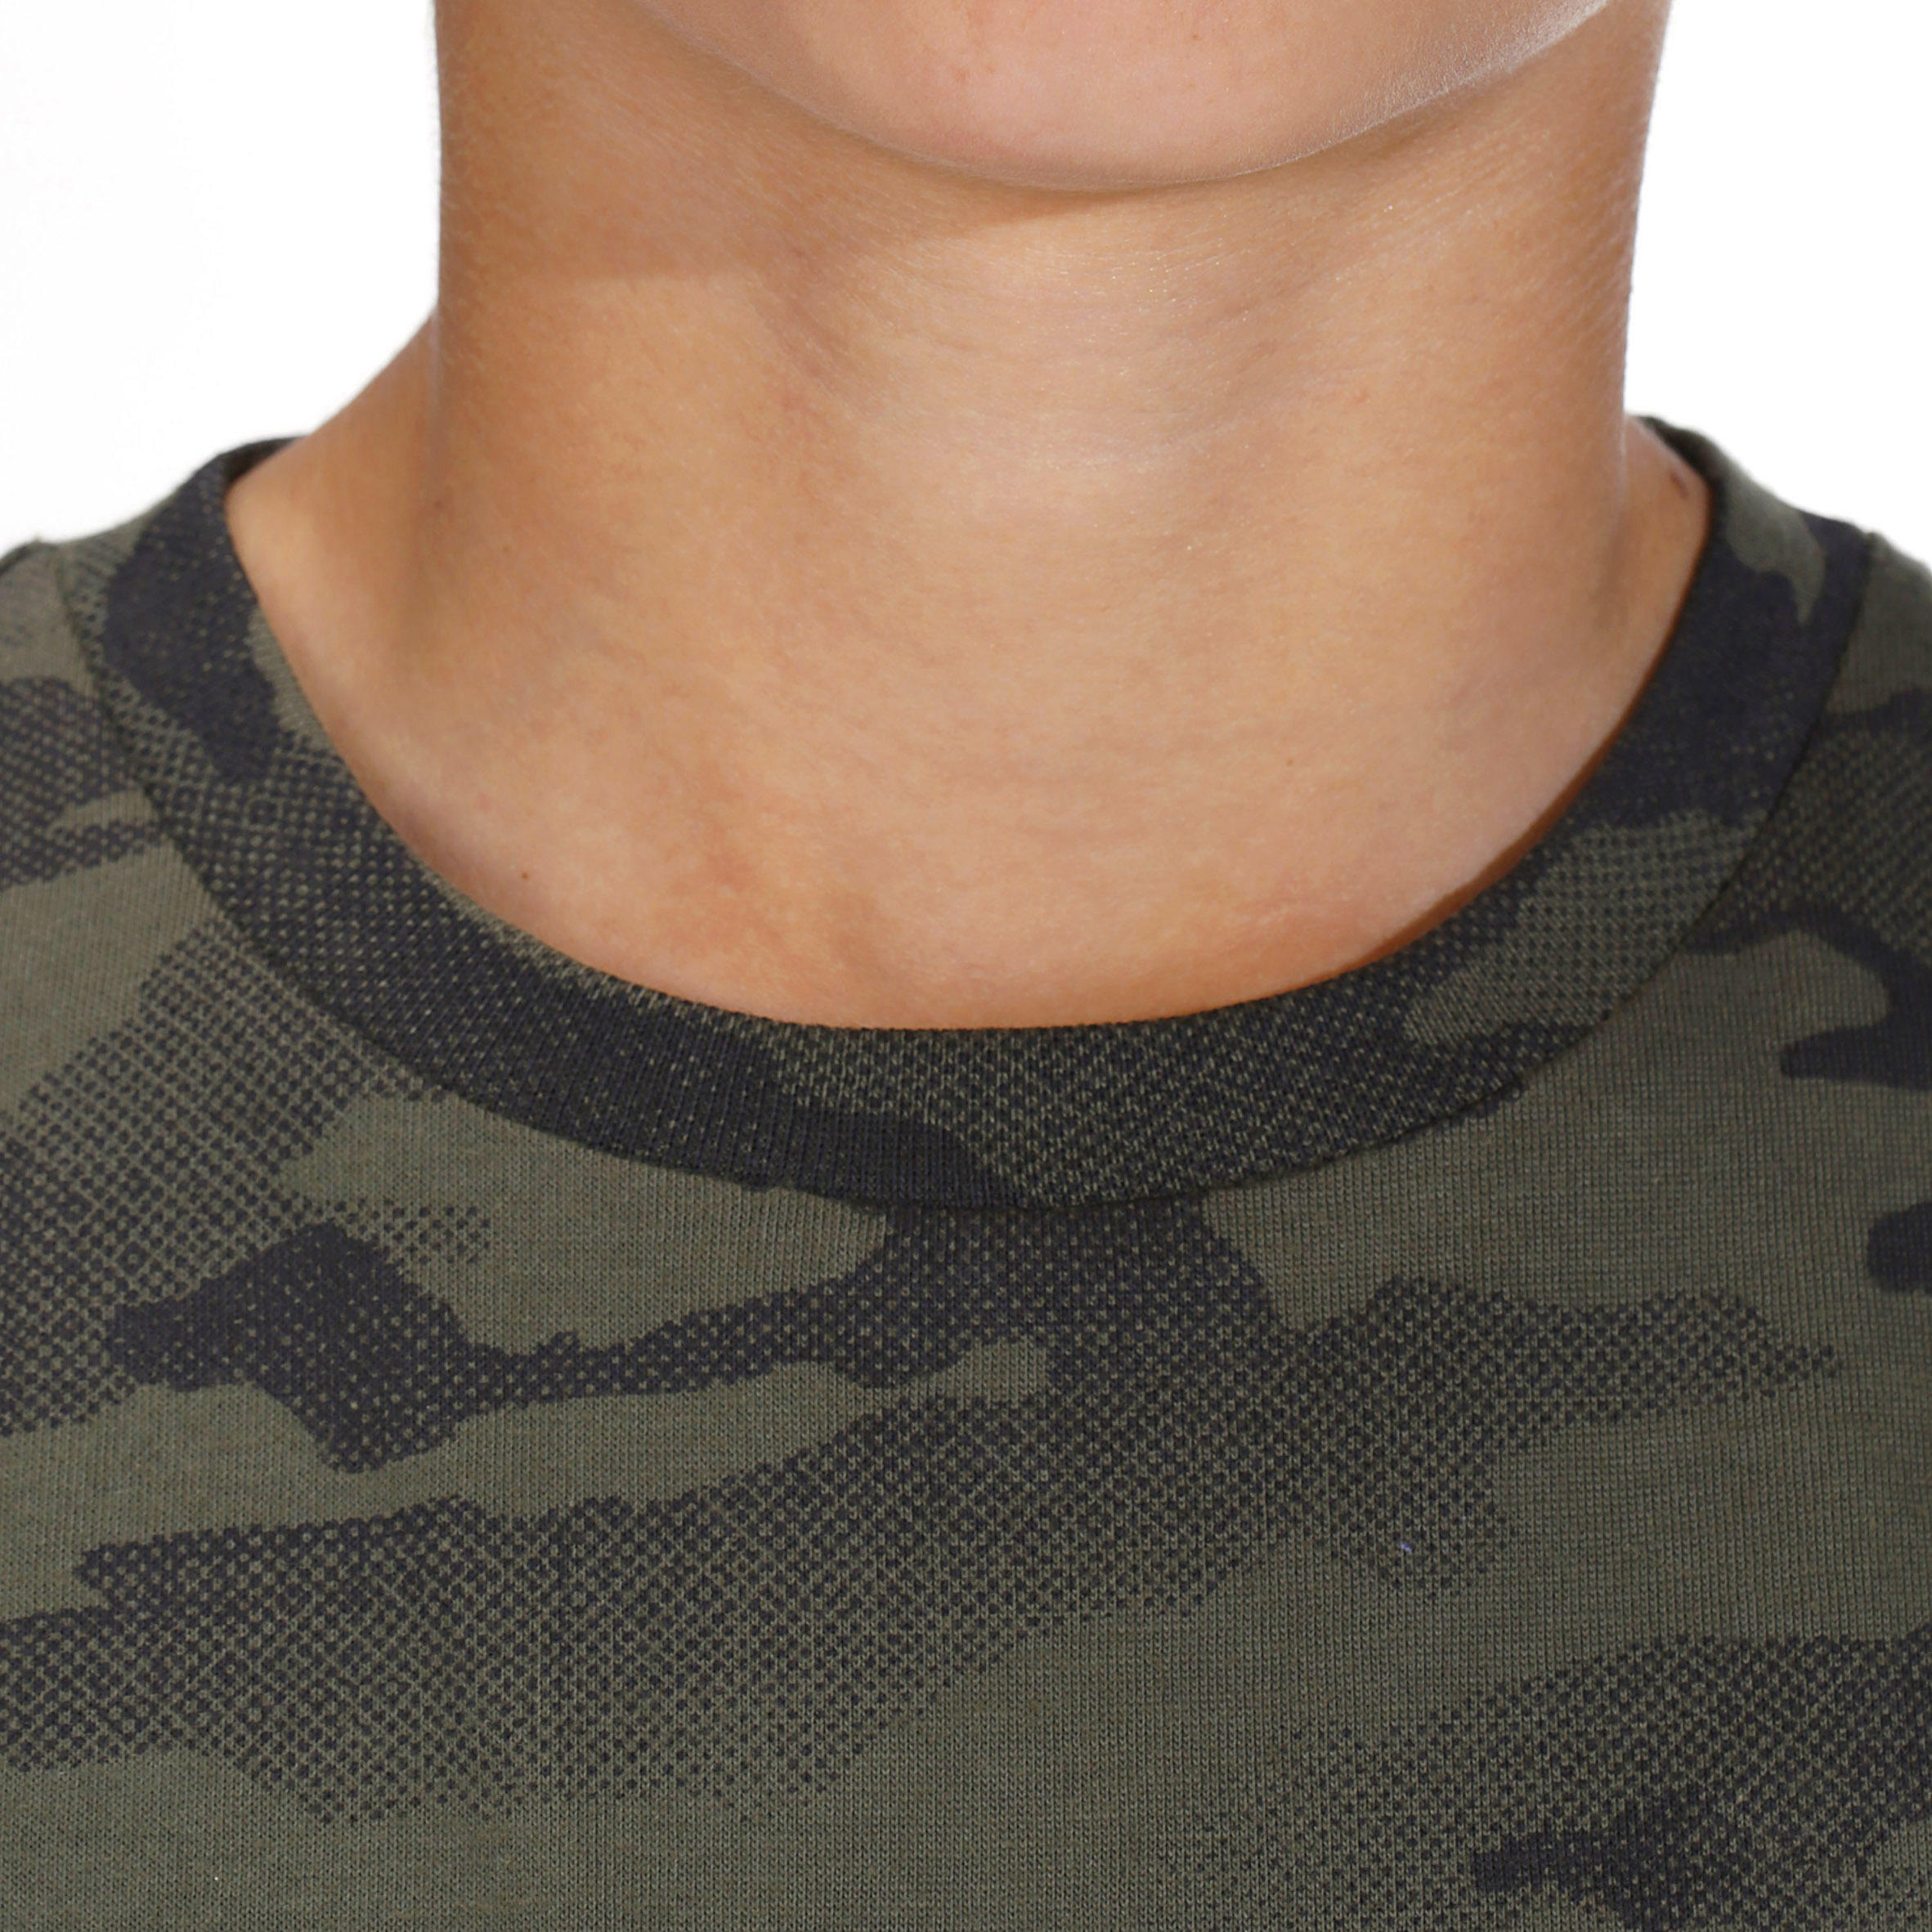 Camiseta Manga Caza Solognac 100 Algodón Camuflaje Militar | Decathlon